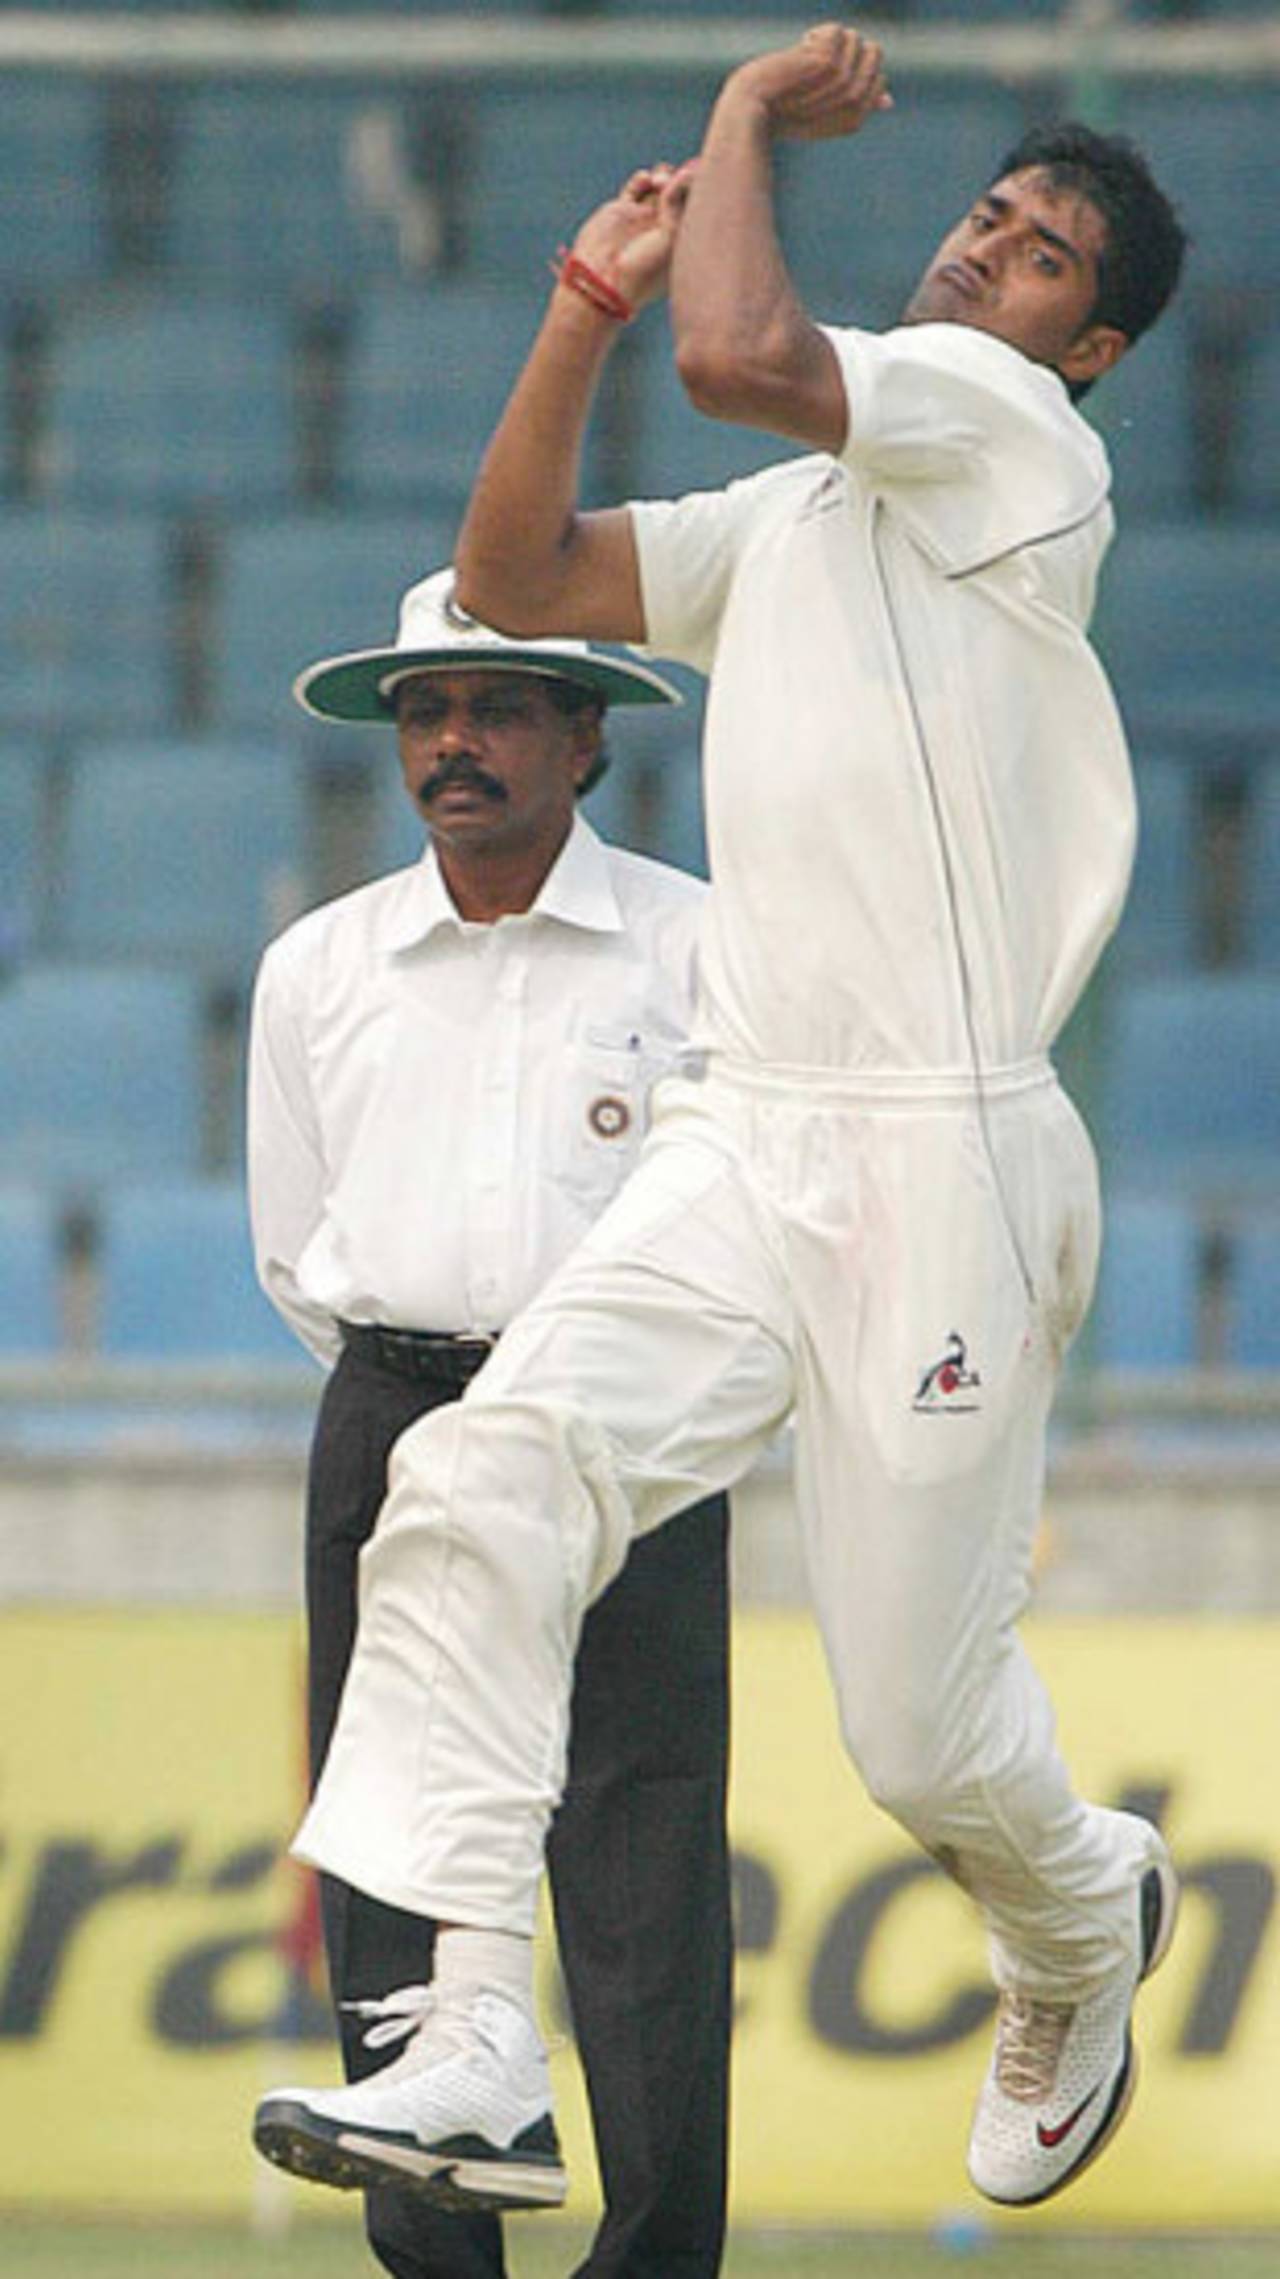 The variable bounce was something Rajasthan's bowlers, including Pankaj Singh, could bank on, said Aakash Chopra&nbsp;&nbsp;&bull;&nbsp;&nbsp;ESPNcricinfo Ltd